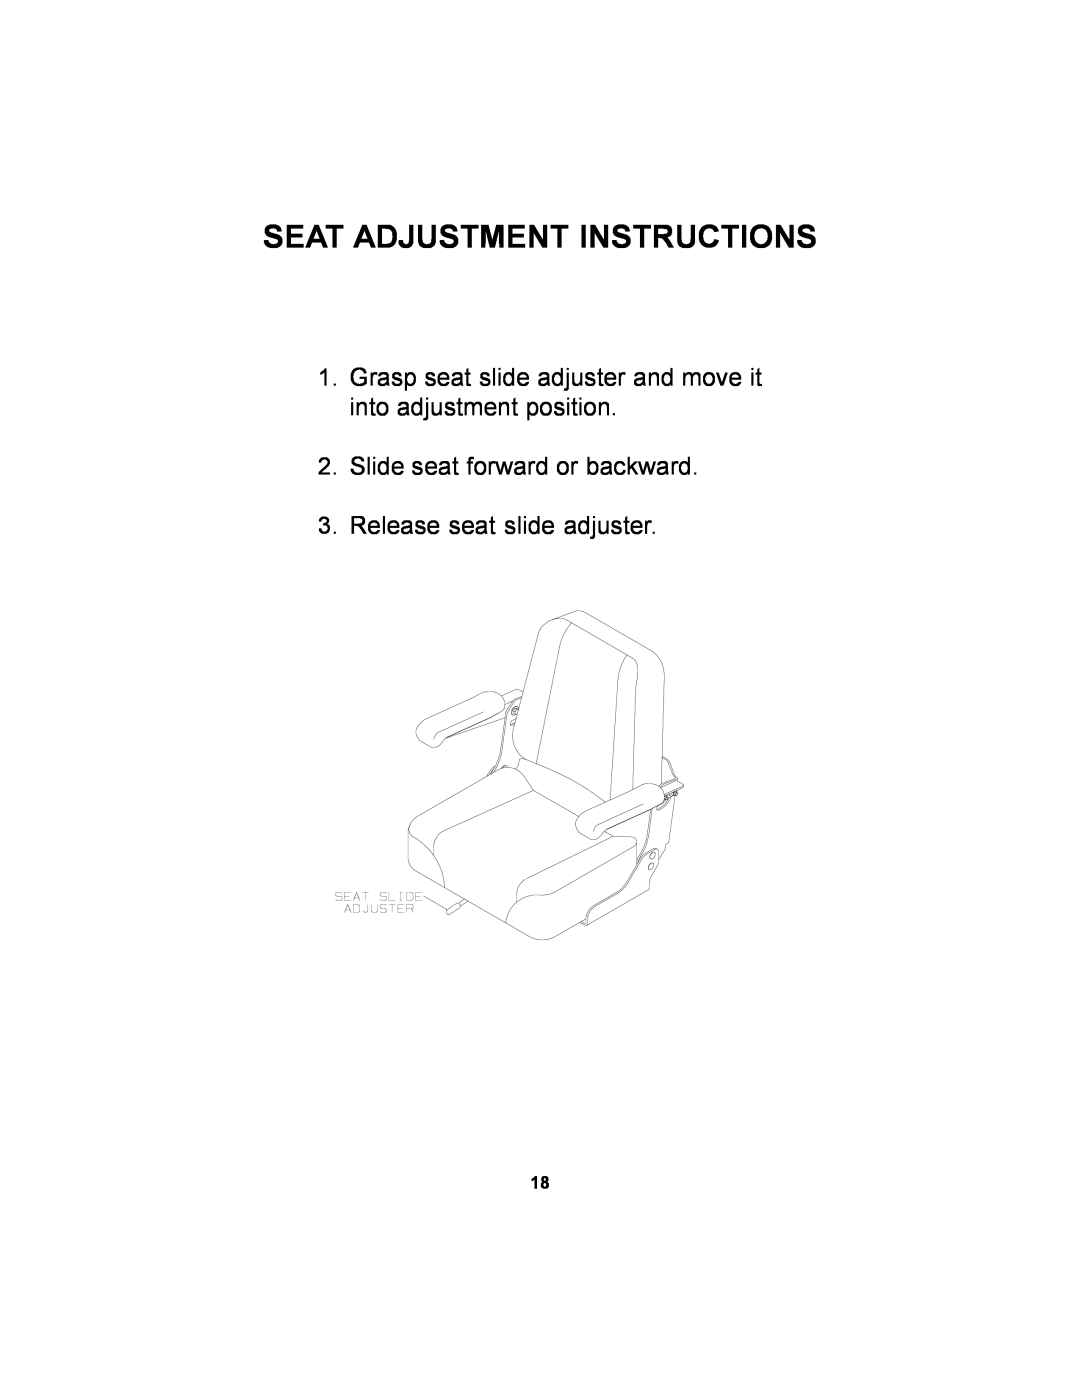 Dixon Black Bear manual Seat Adjustment Instructions, Grasp seat slide adjuster and move it into adjustment position 